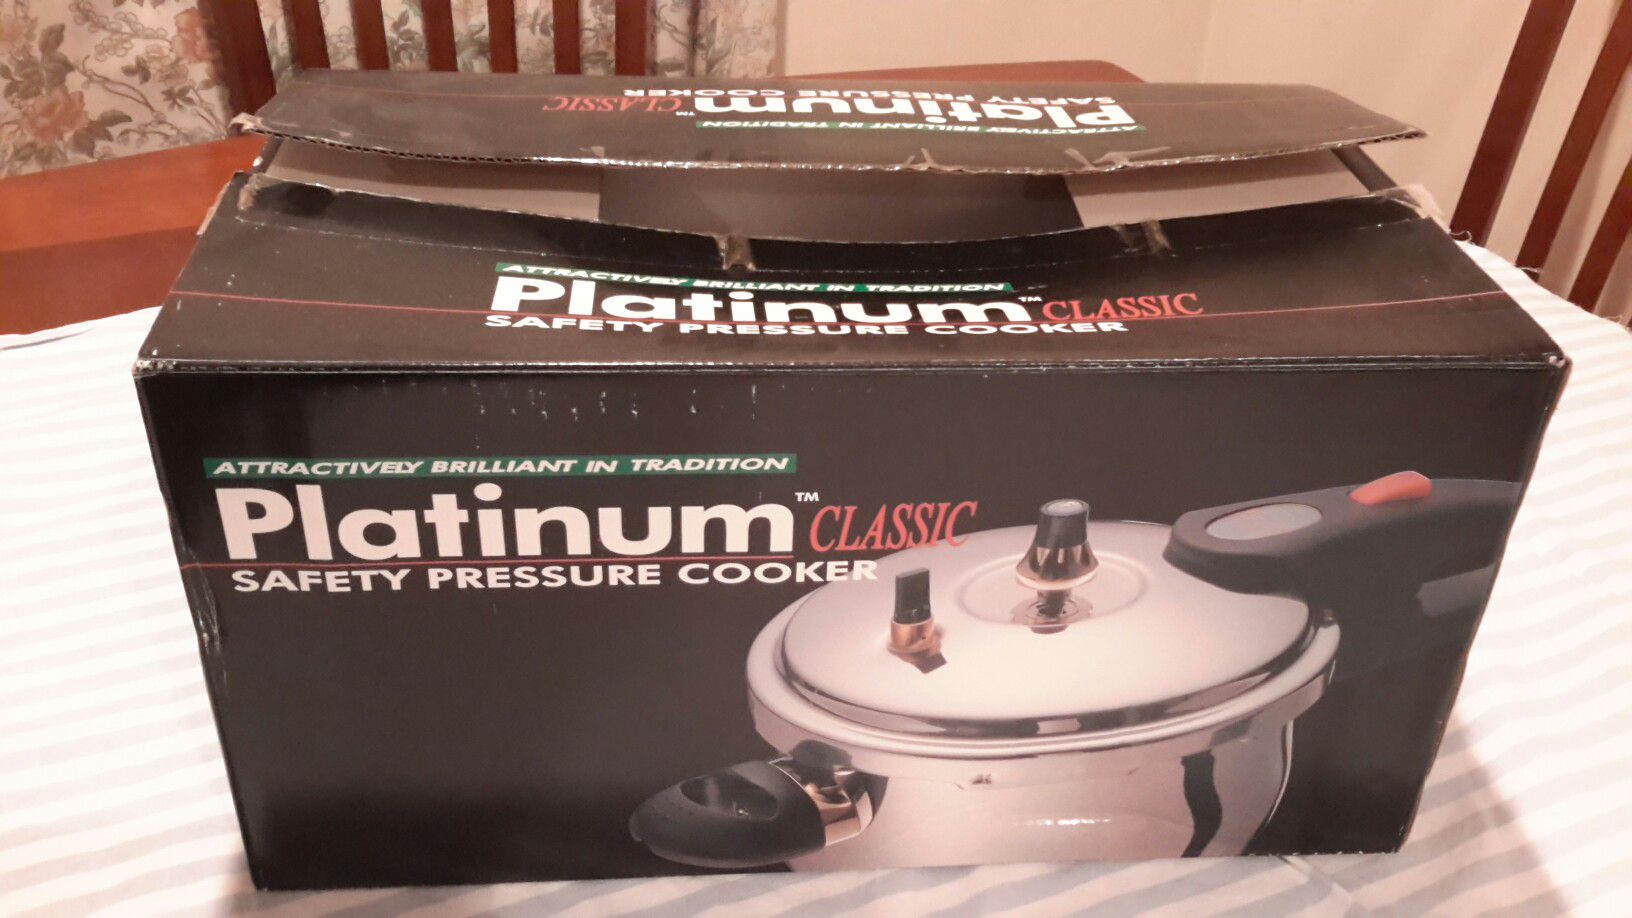 Like-New, Elite Platinum 10Qt. Digital Pressure Cooker (Model EPC-1013R)  for Sale in Lake Stevens, WA - OfferUp